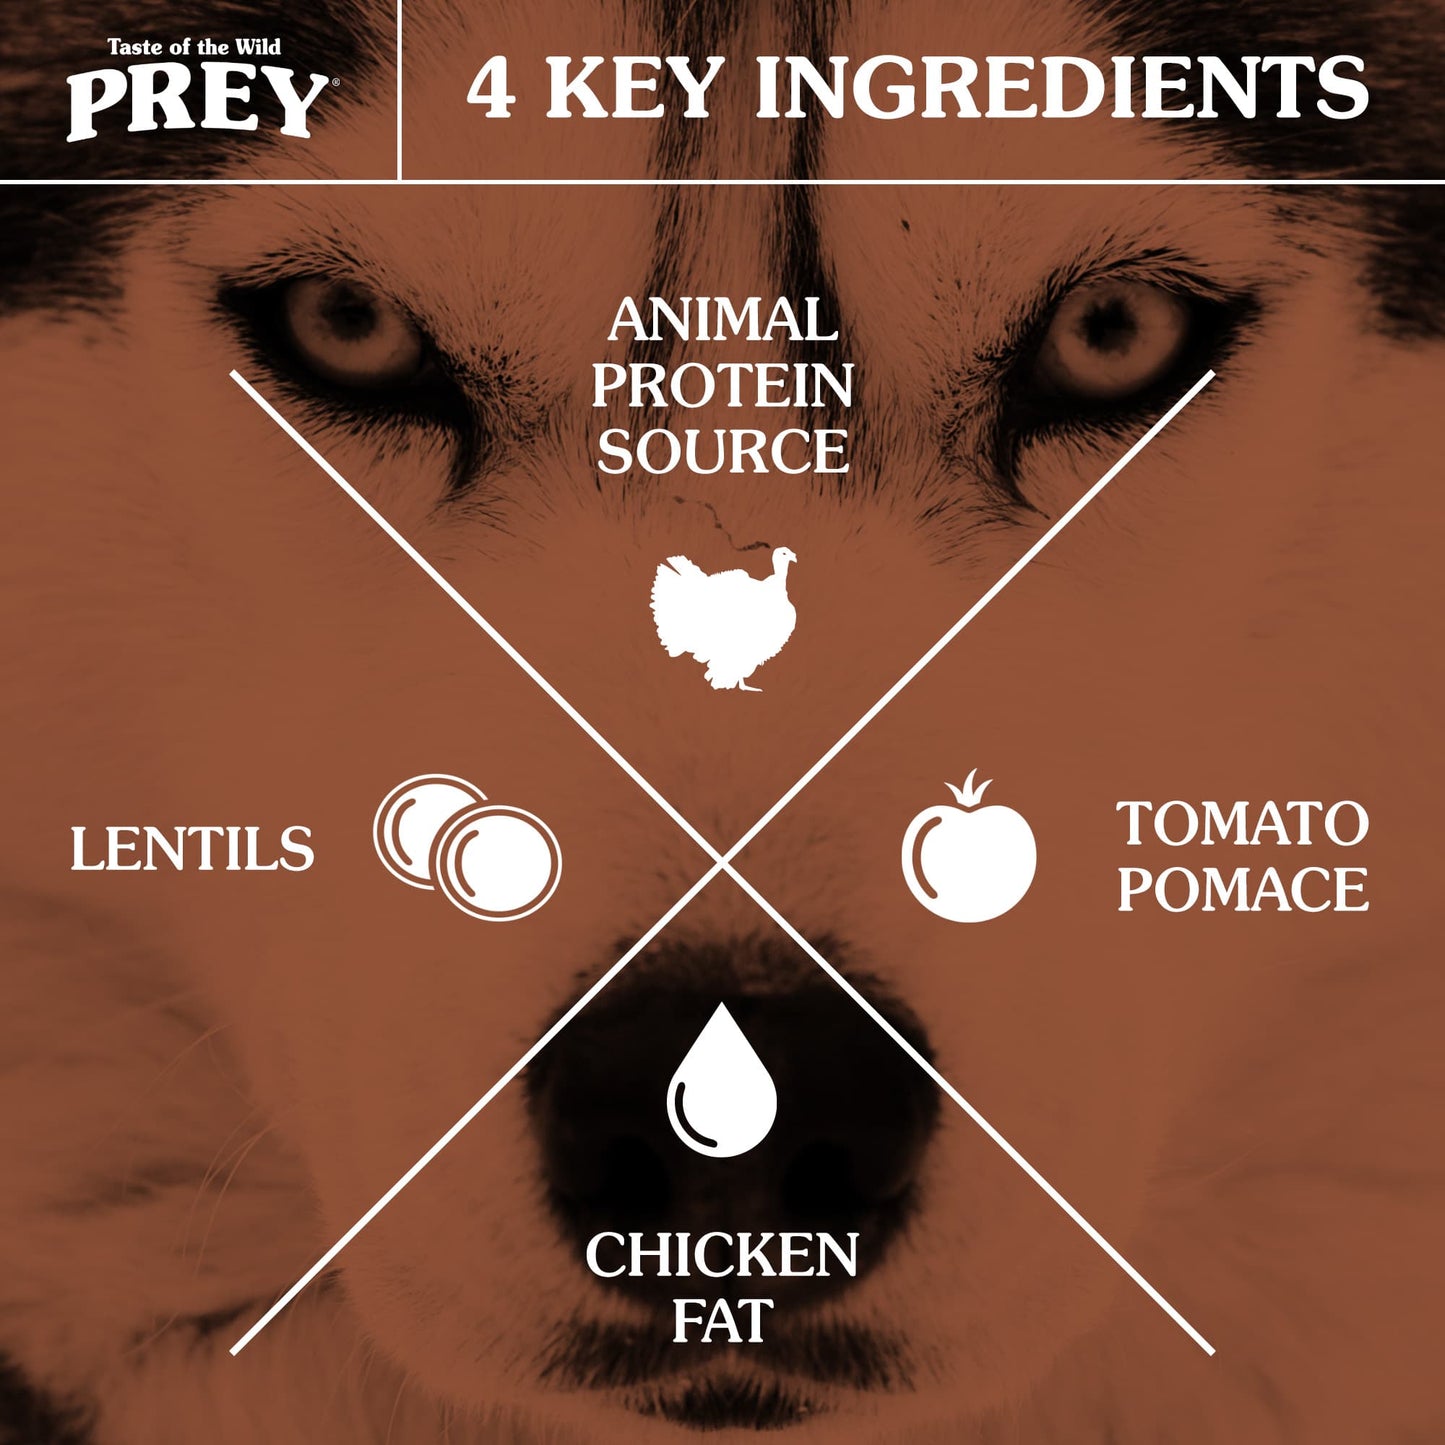 Taste of the Wild PREY Turkey Limited Ingredient Formula for Dogs